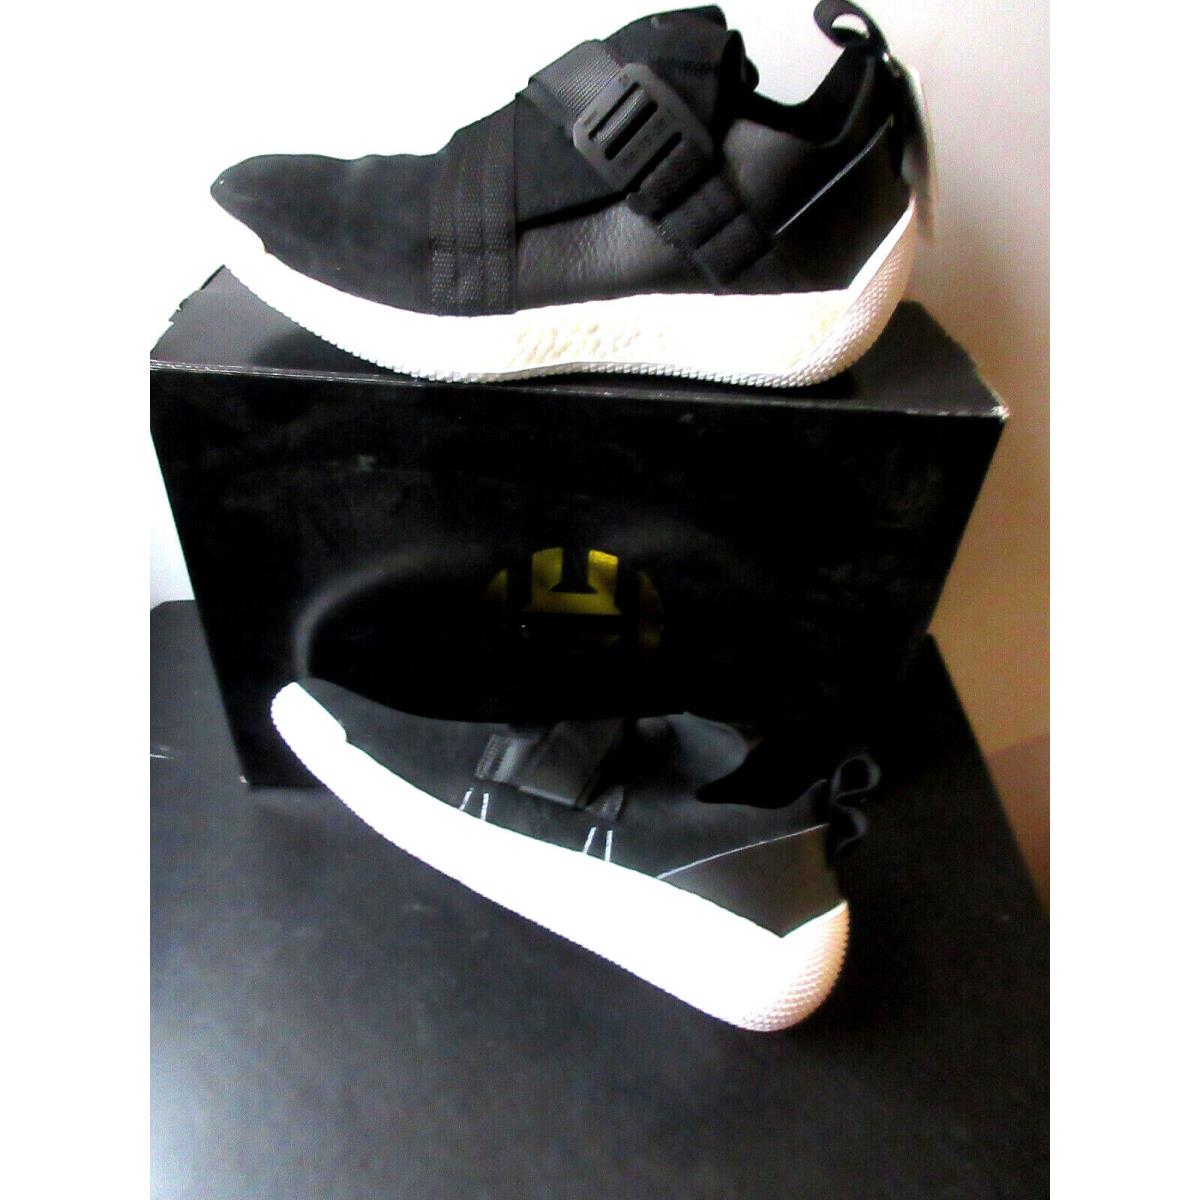 Adidas shoes Harden - Black 4